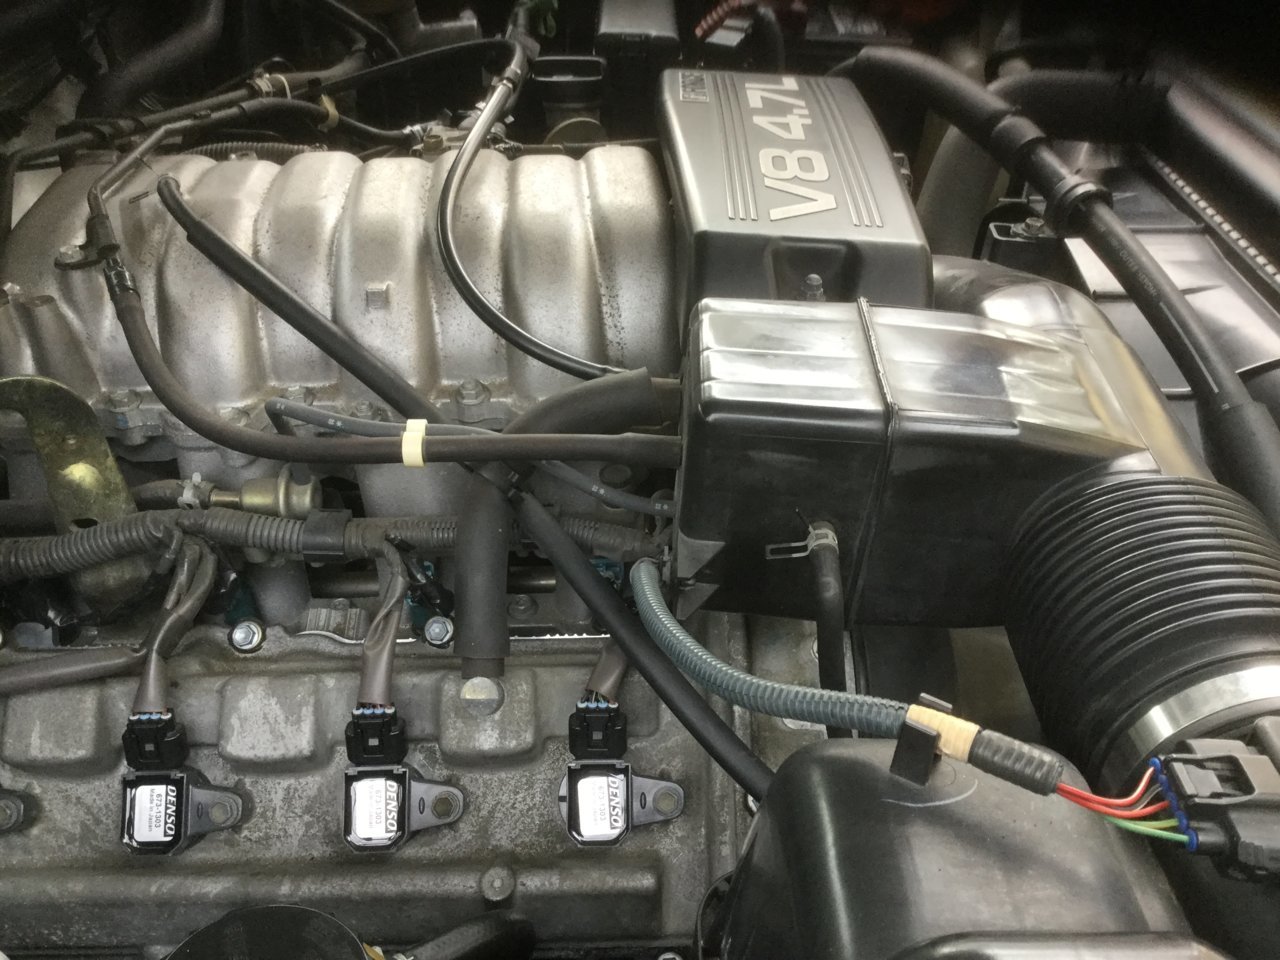 2000 Tundra - error diagnostic/no check engine light | Toyota Tundra Forum